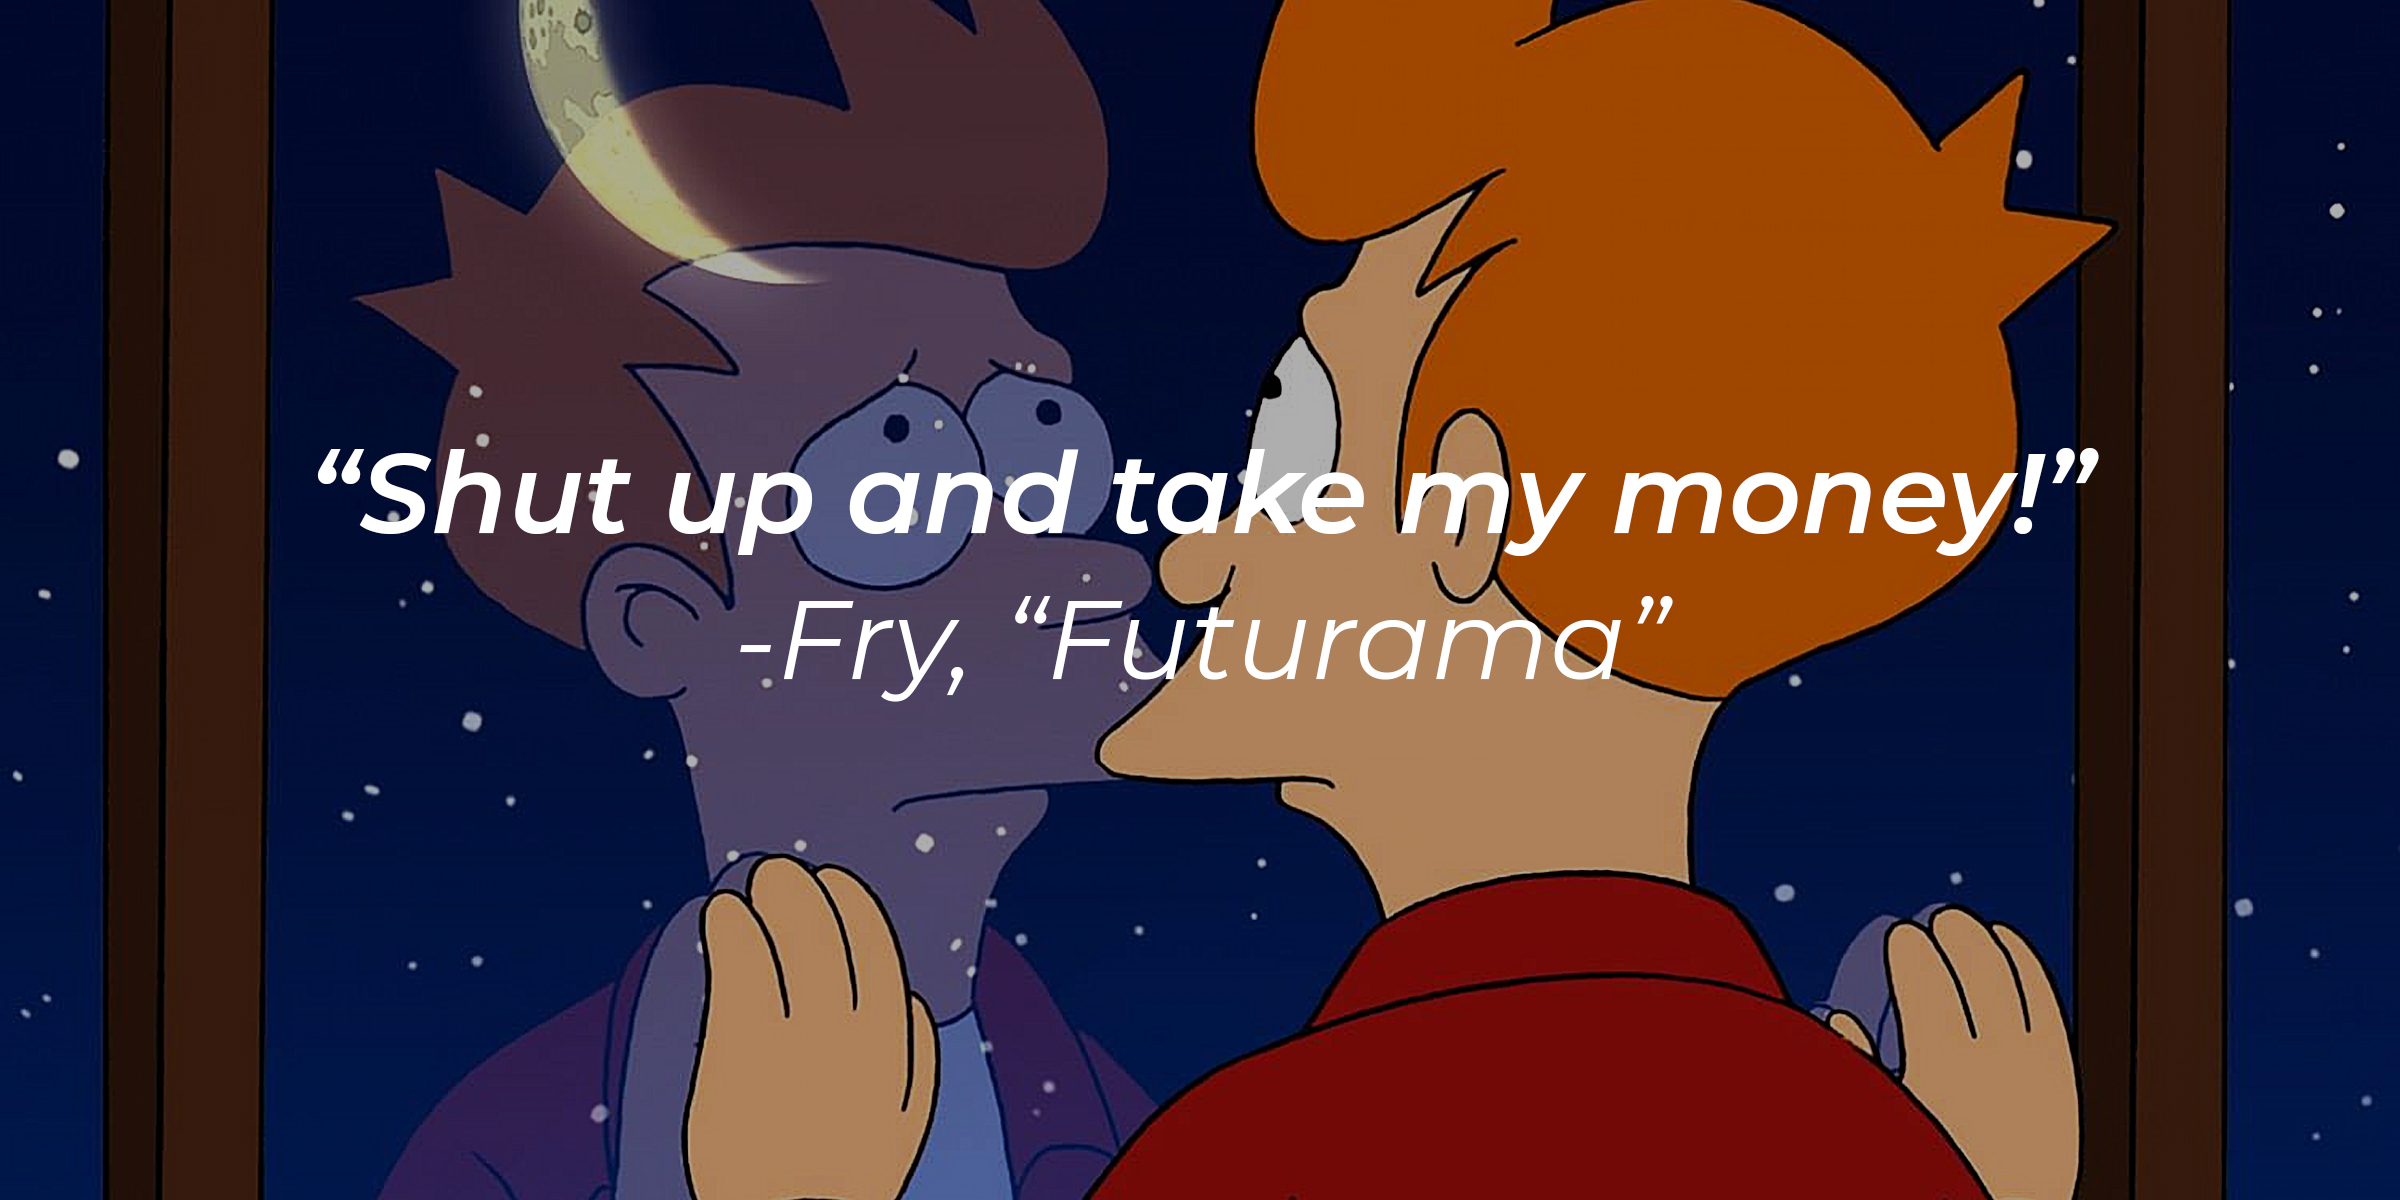 Fry Futurama's quote: "Shut up and take my money!" | Source: Facebook.com/Futurama